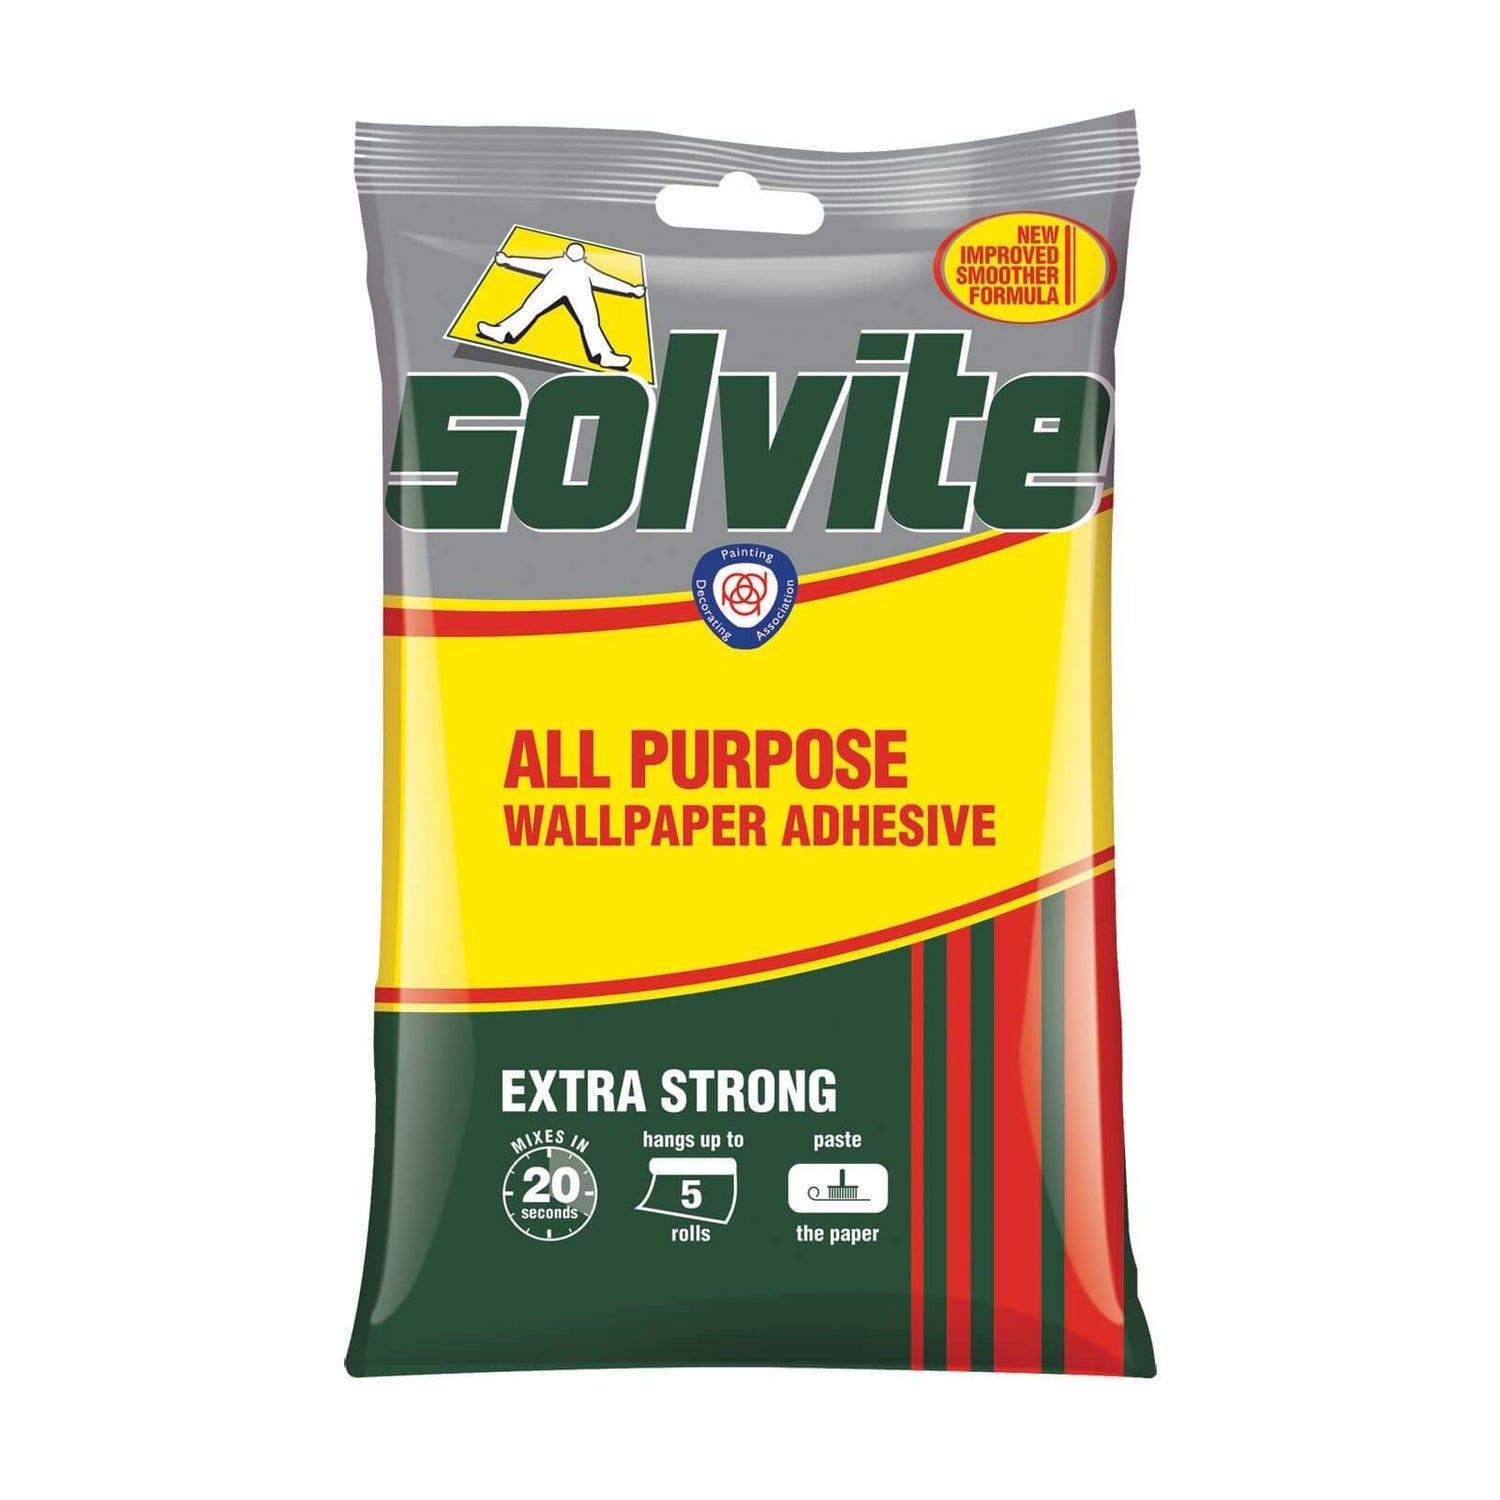 Solvite All Purpose Wallpaper Adhesive - 5 Rolls | Homebase